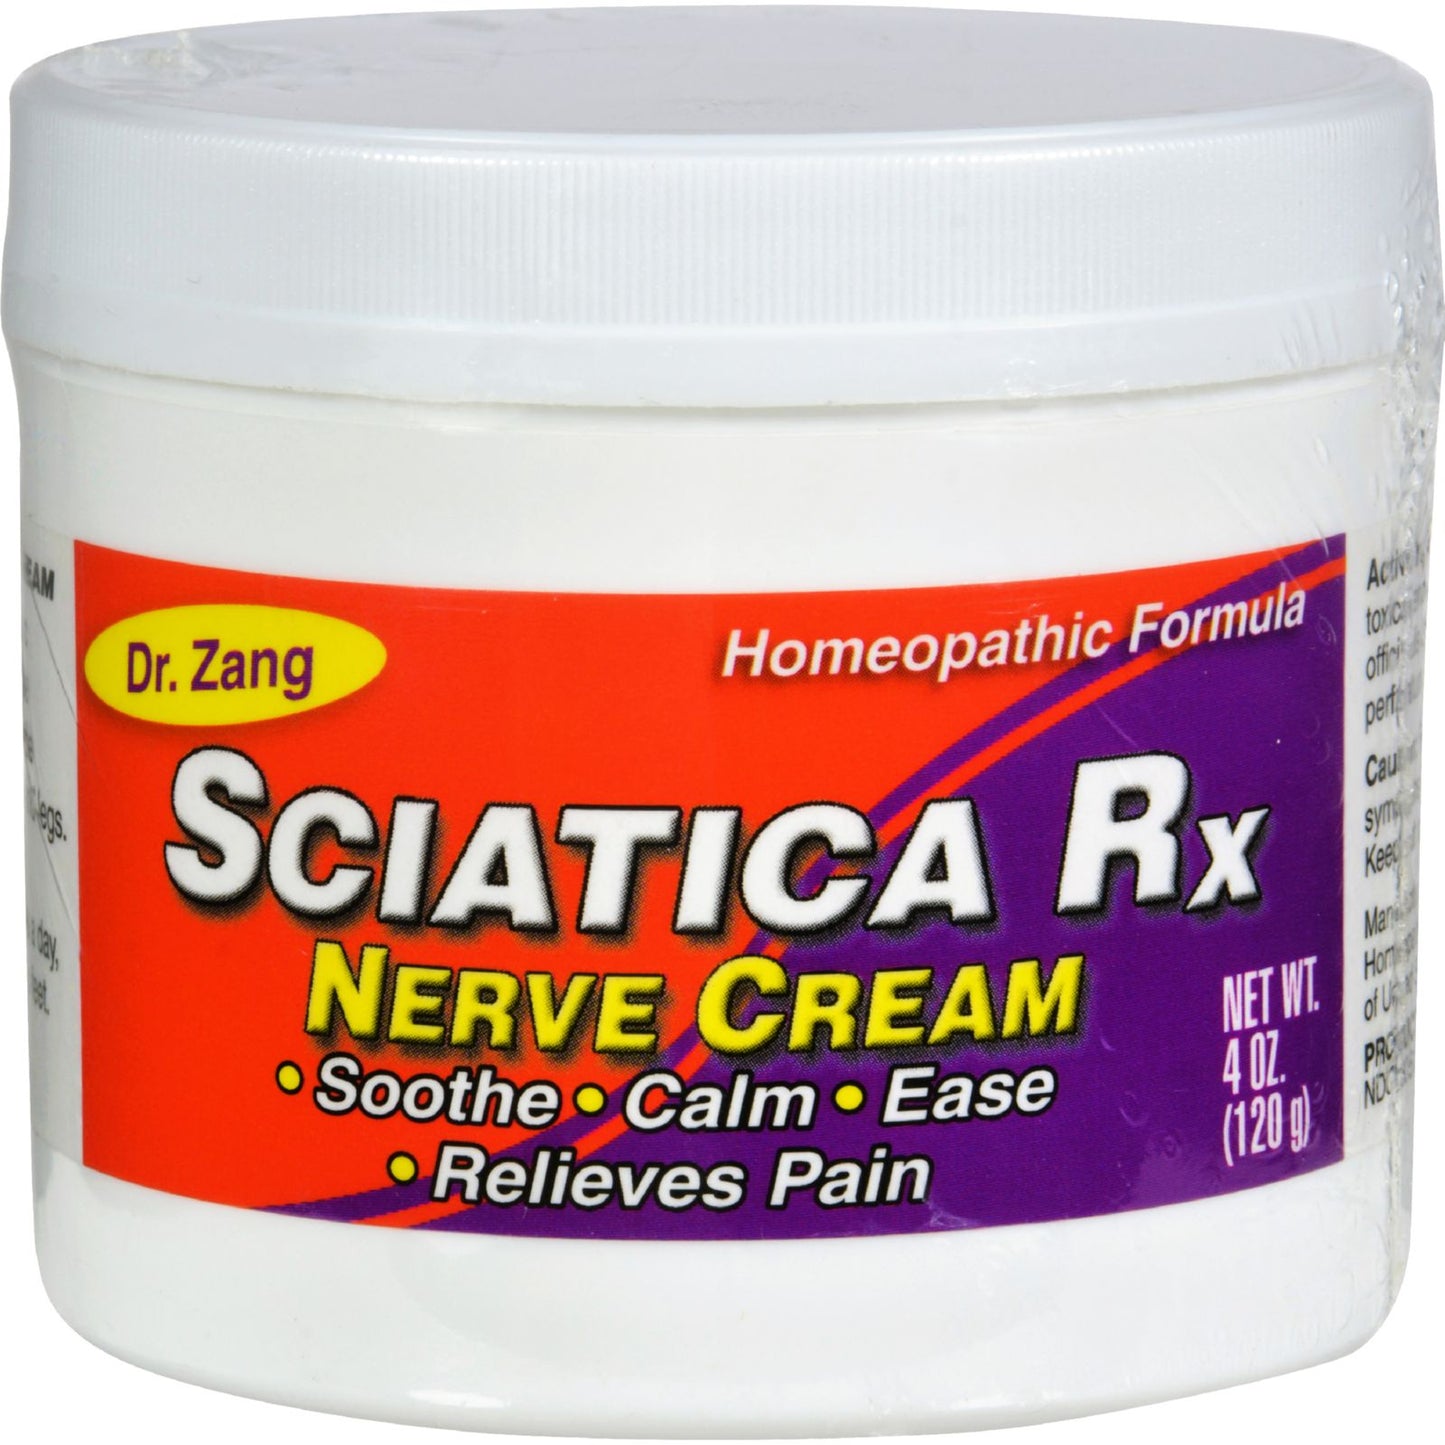 Dr. Zang Sciatica Rx Nerve Cream Homeopathic Formula, 4 Oz